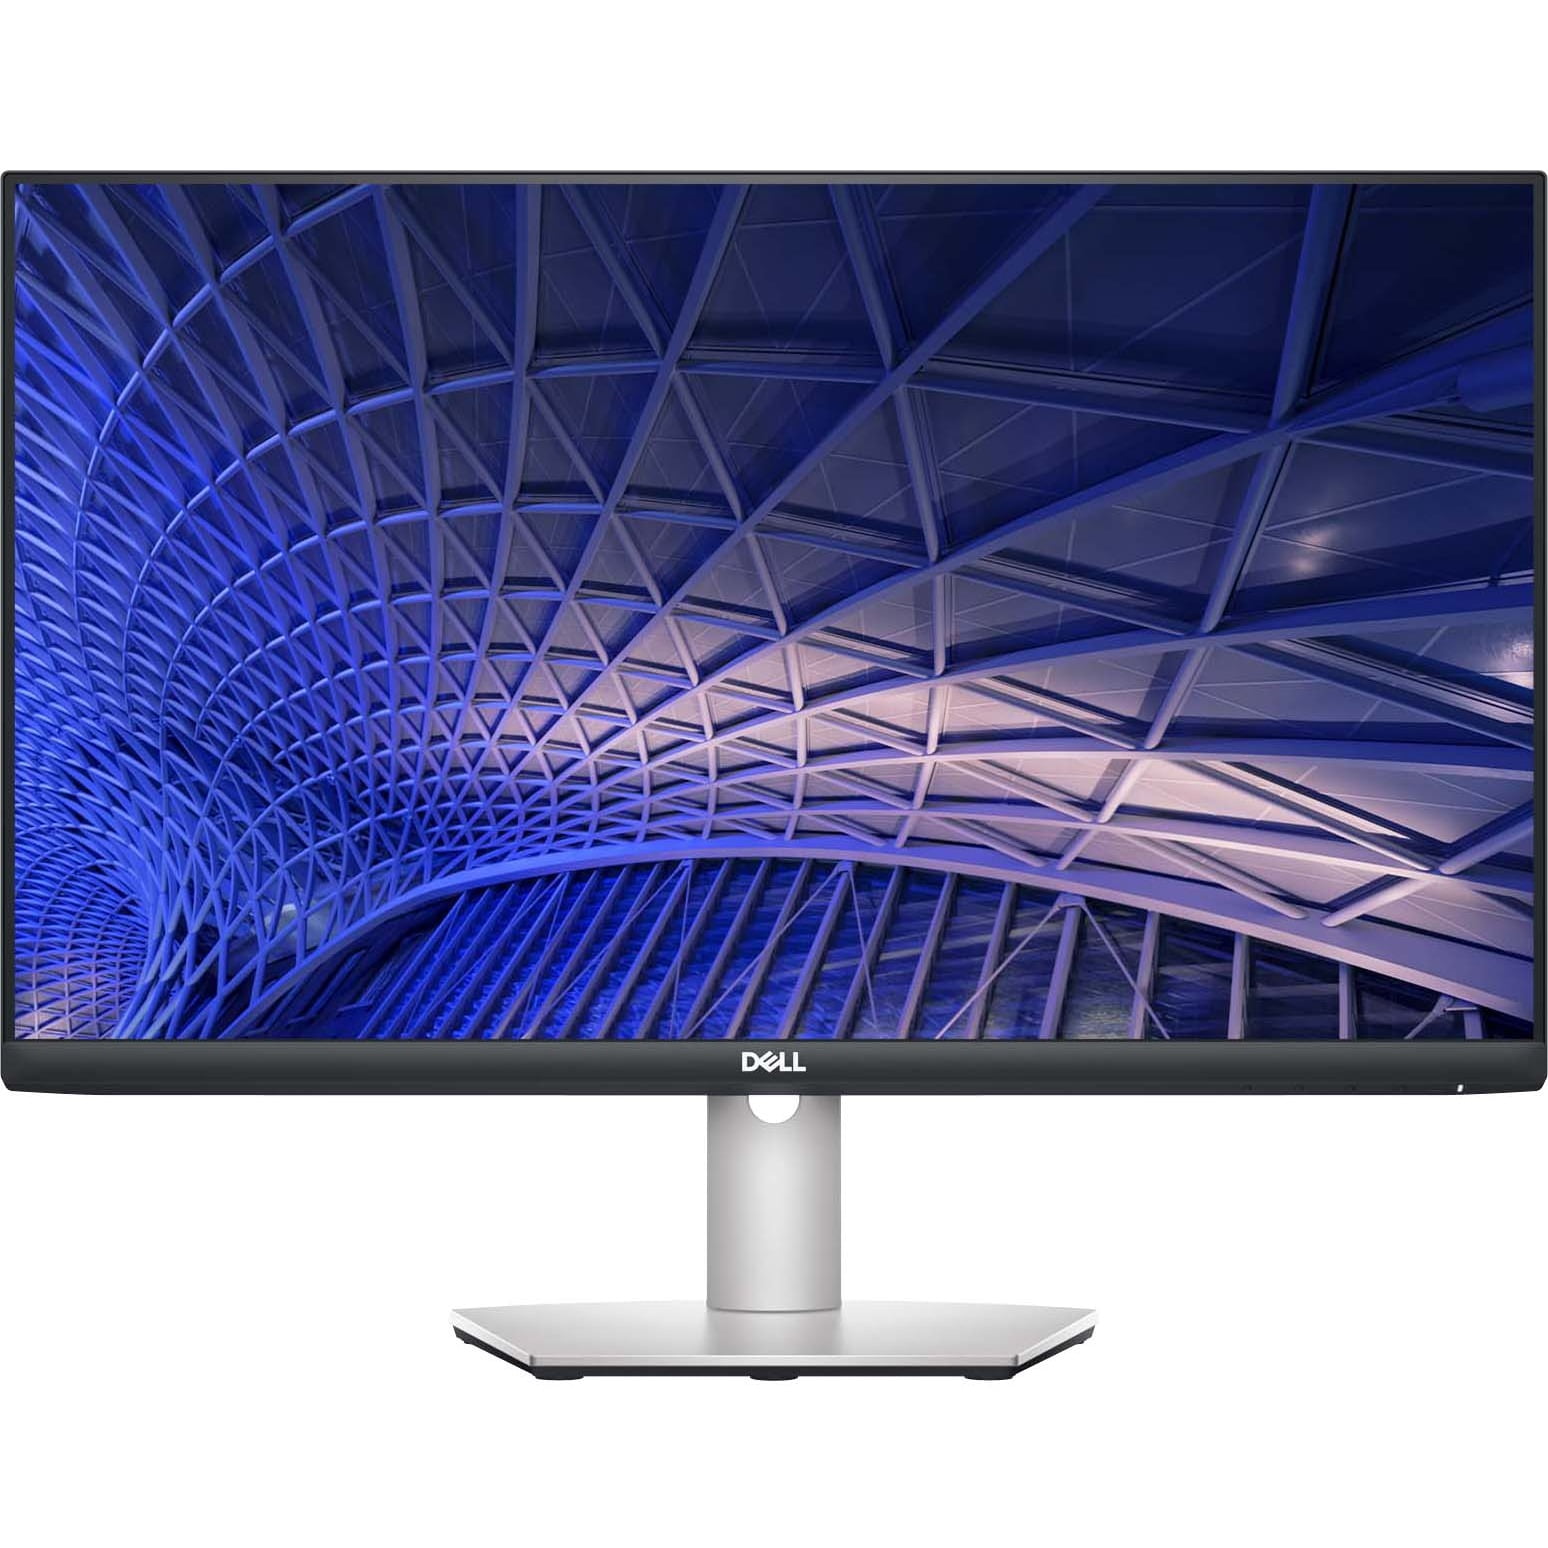 Dell S2421HN - LED monitor - 23.8